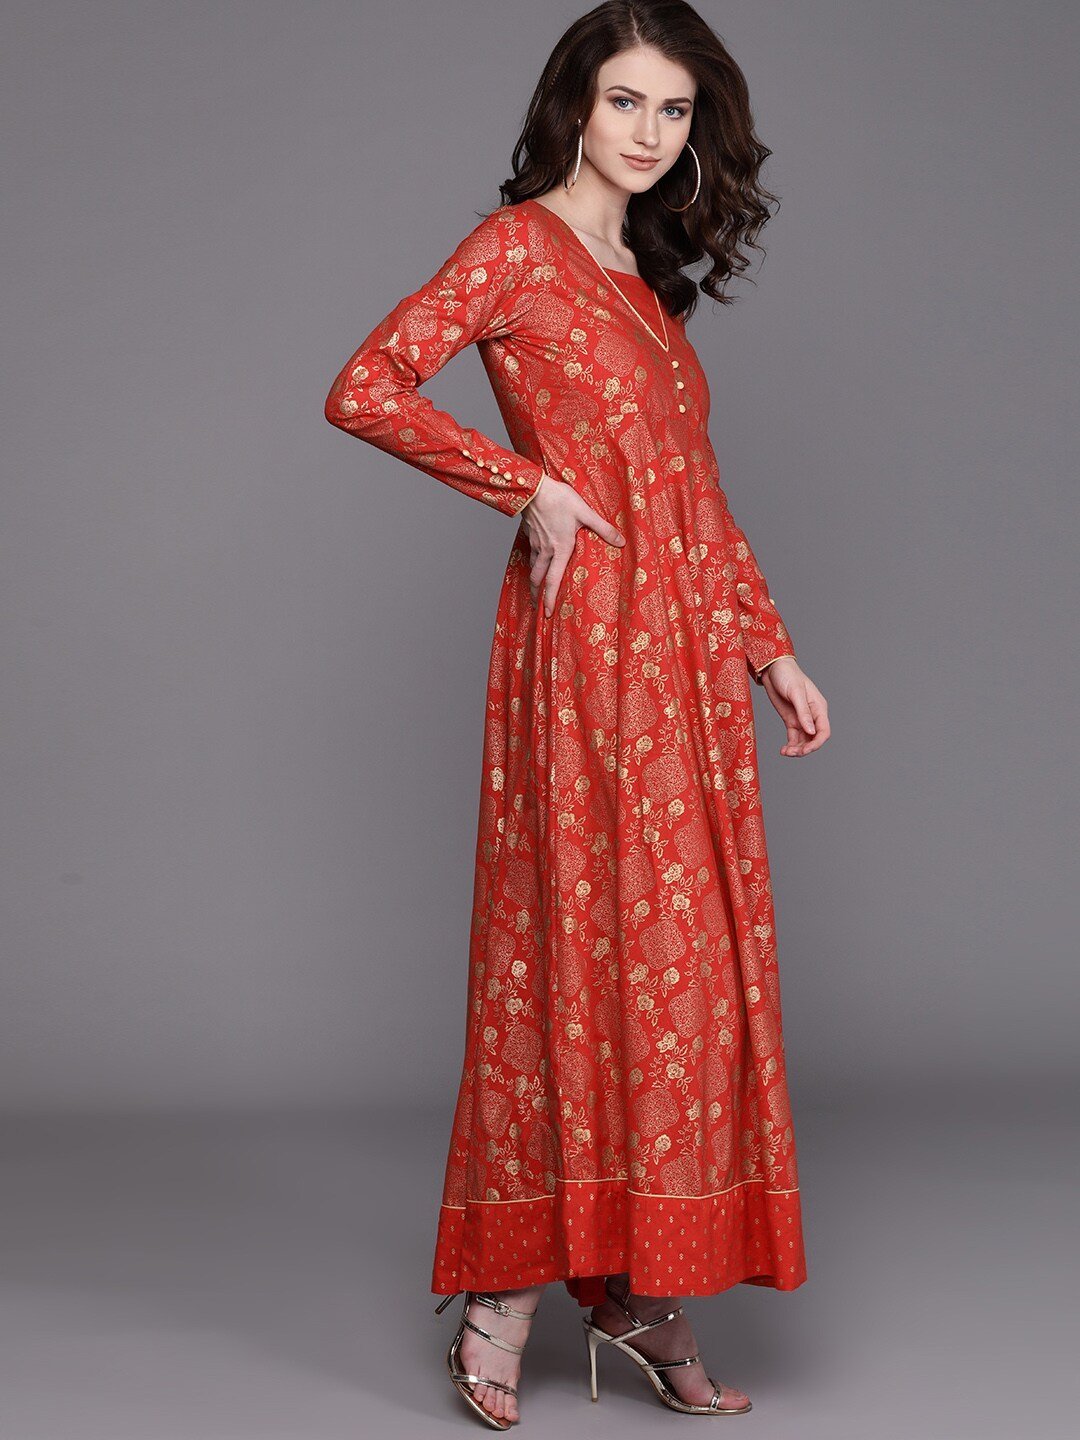 Women's  Red & Golden Printed Maxi Dress - AKS